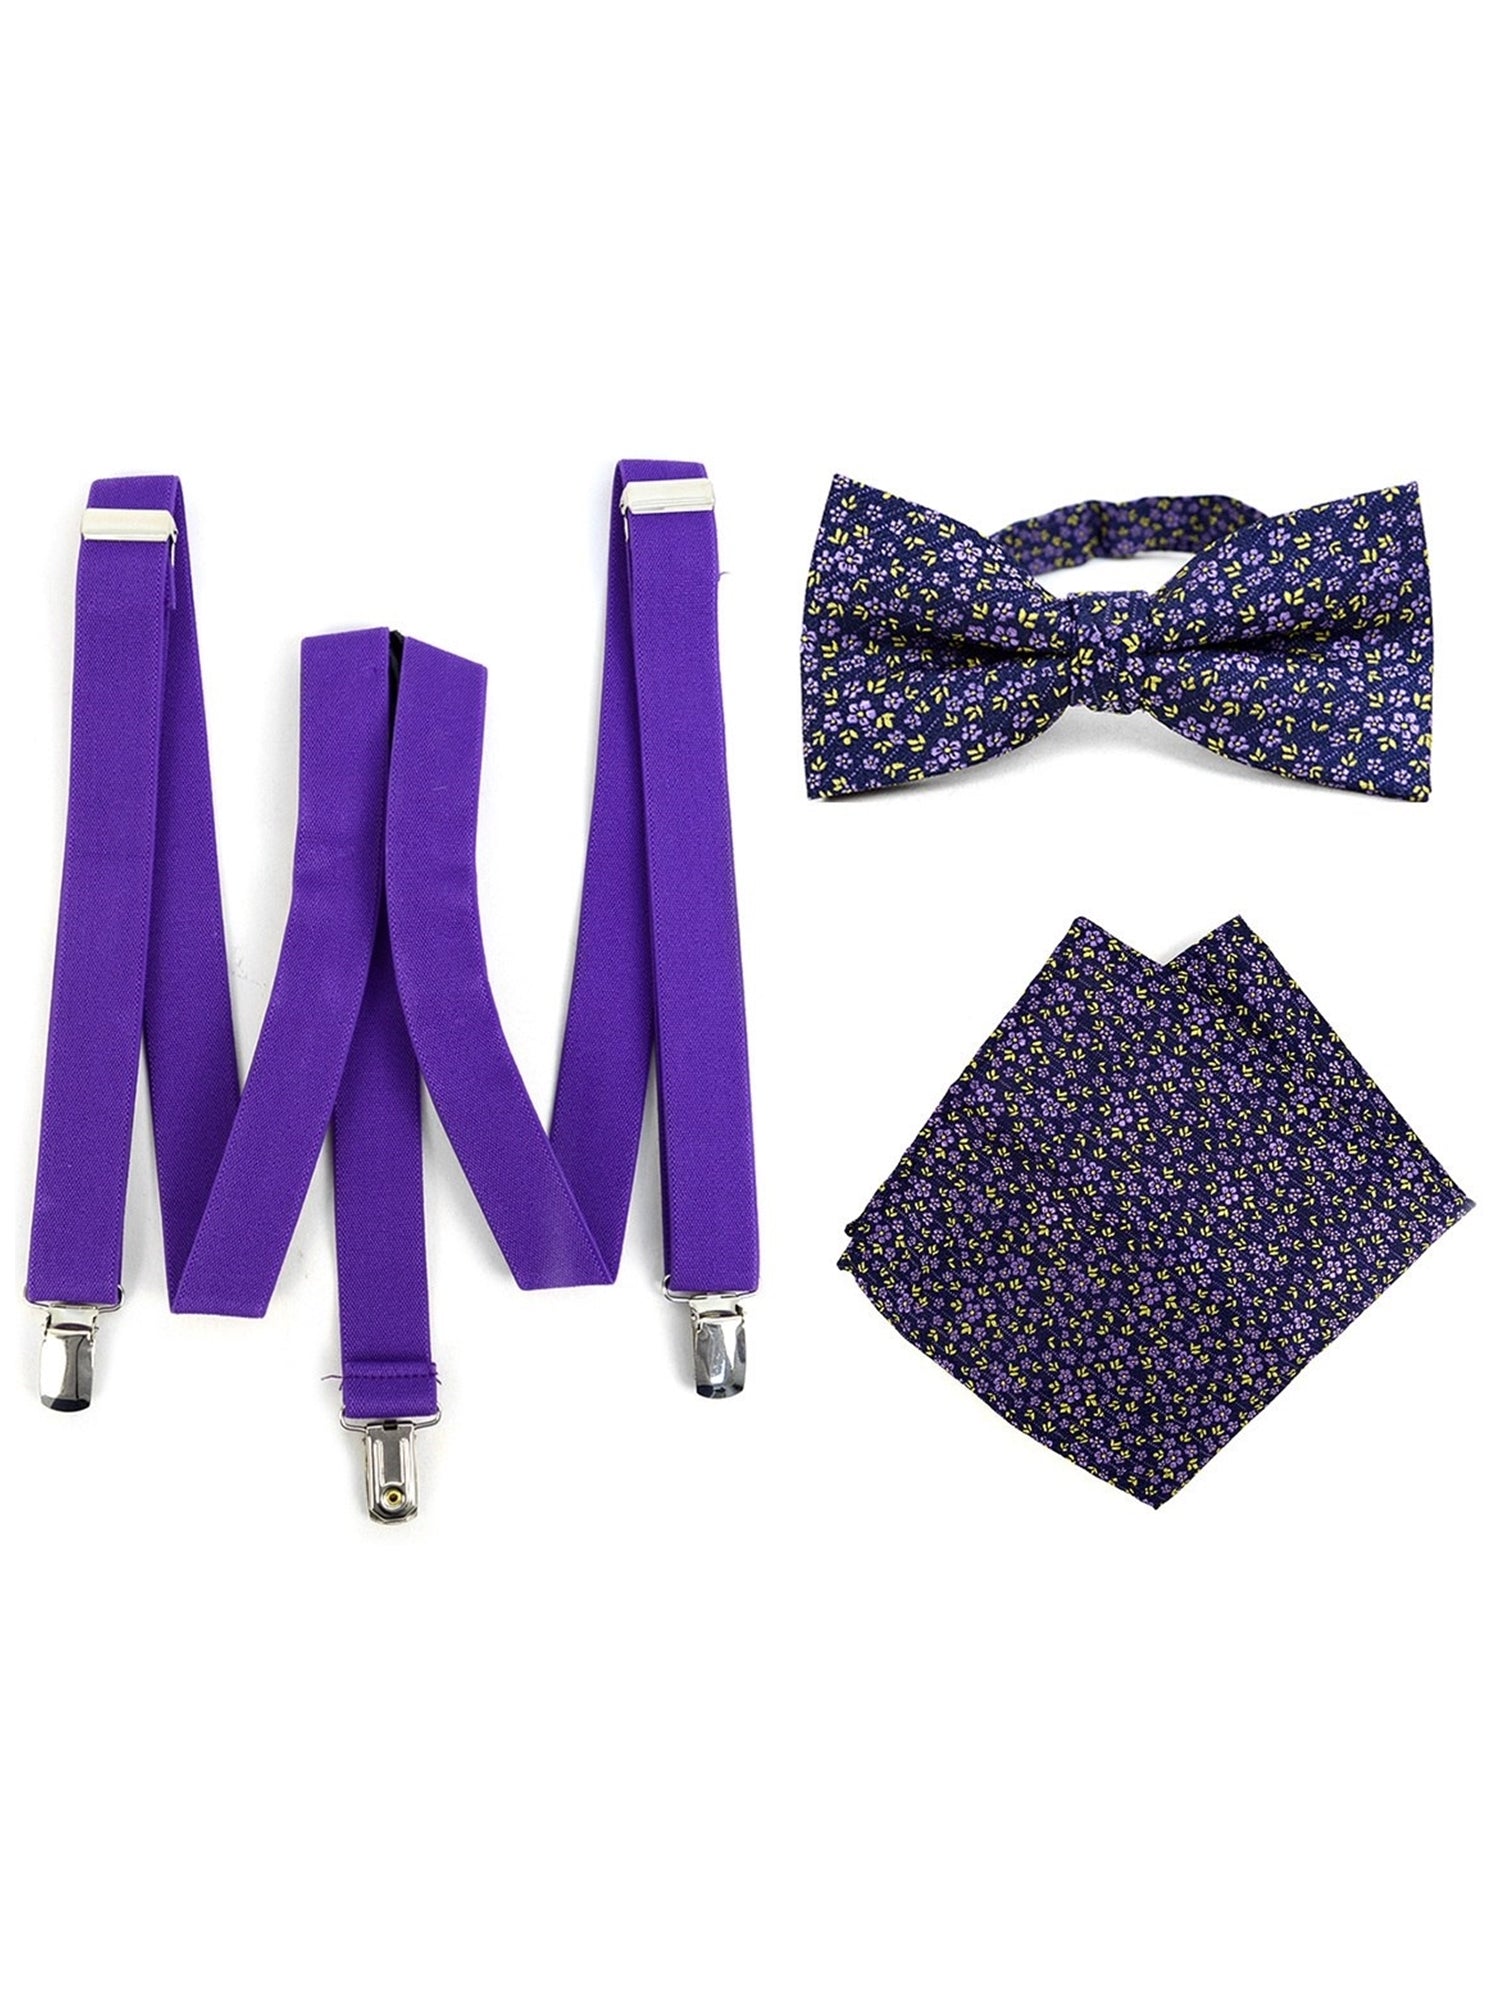 Men's Purple 3 PC Clip-on Suspenders, Bow Tie & Hanky Sets Men's Solid Color Bow Tie TheDapperTie Purple # 4 Regular 